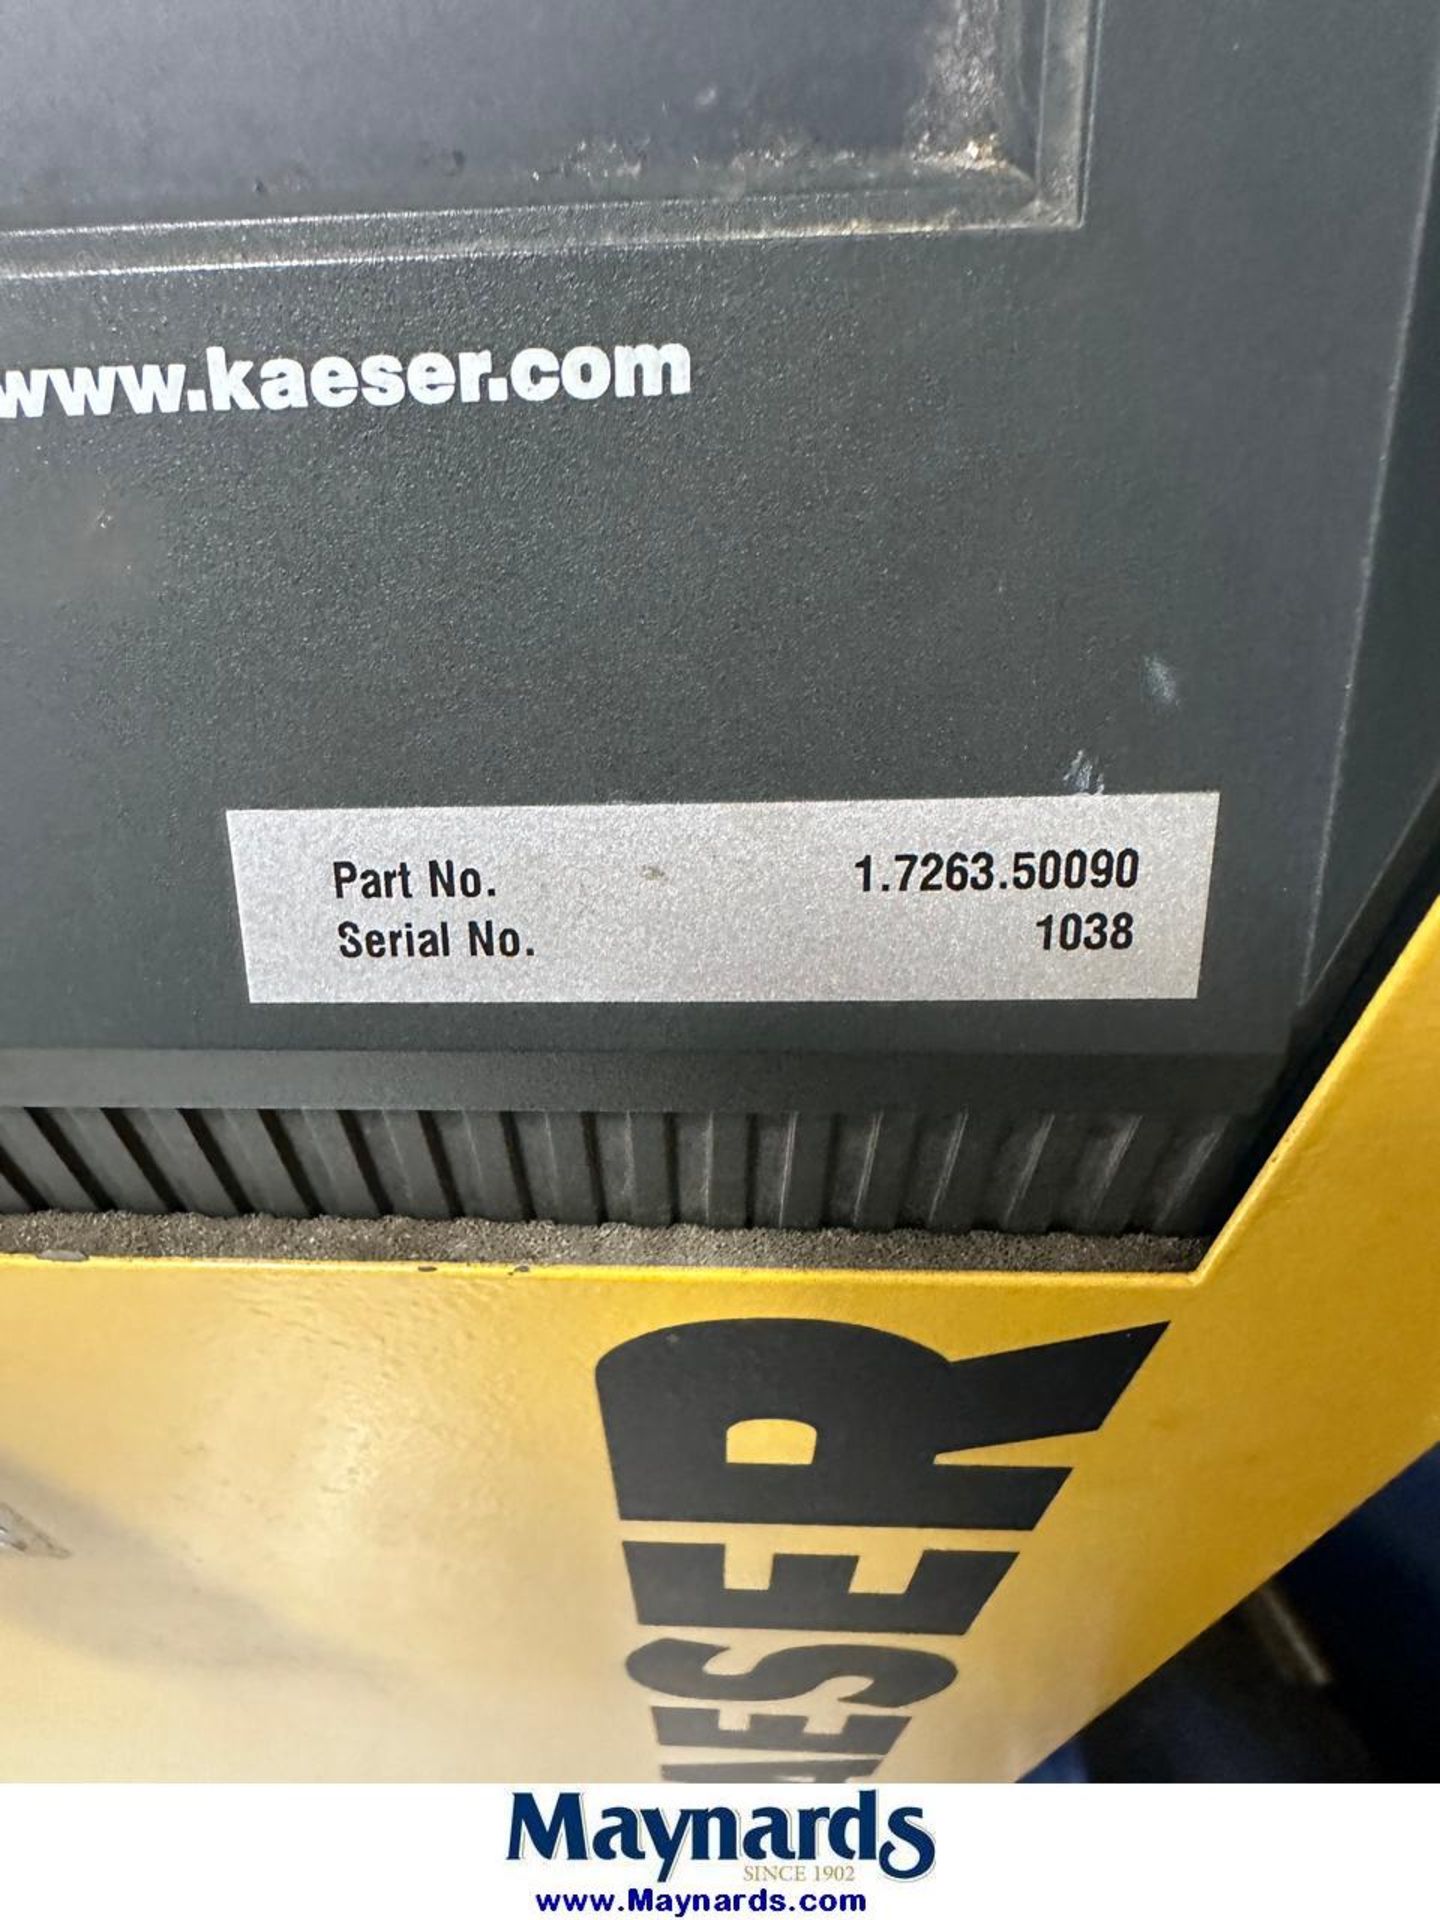 Kaeser SK26 rotary screw air compressor - Image 2 of 3